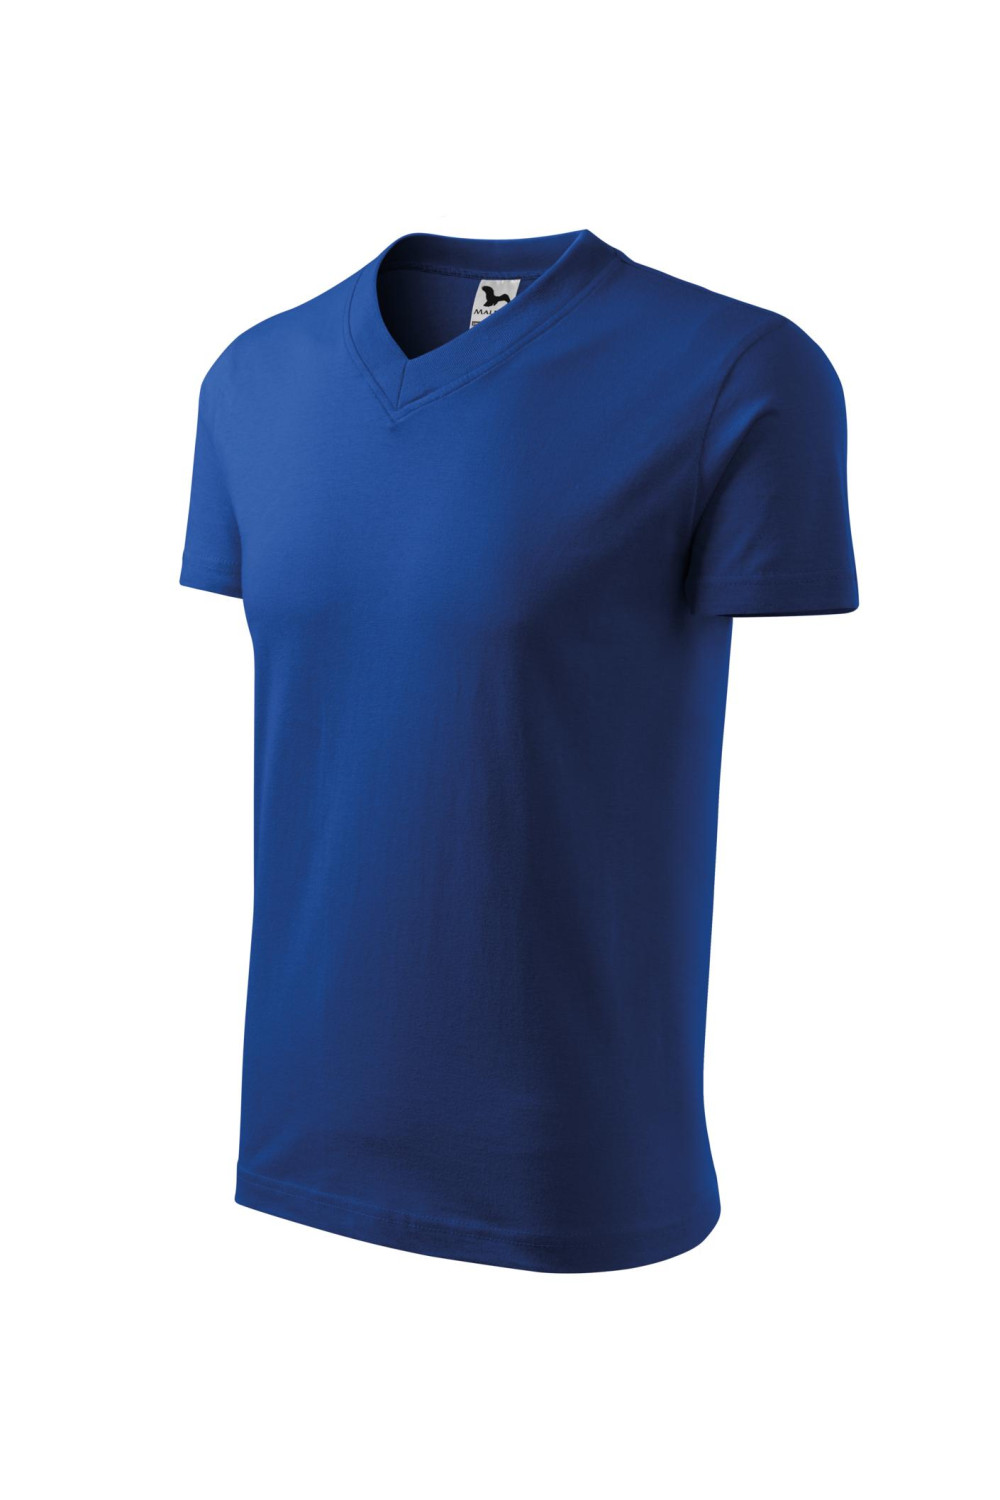 V-NECK 102 MALFINI Koszulka unisex 100% bawełna t-shirt chabrowy